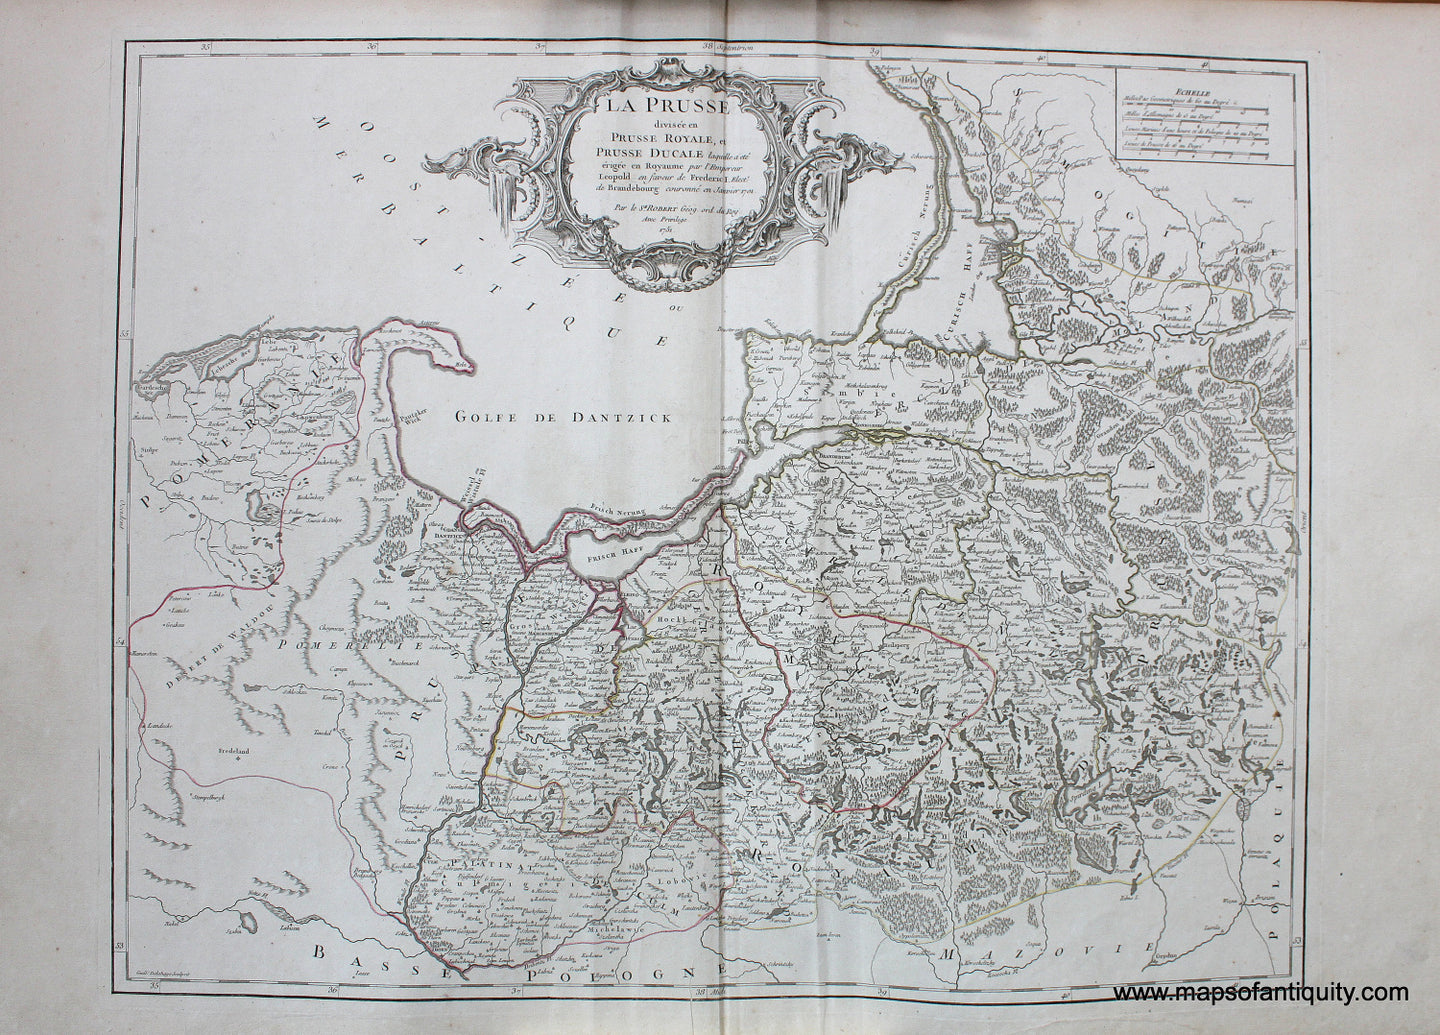 Antique-Hand-Colored-Map-La-Prusse-Prussia-Europe-Poland-1751-Vaugondy-Maps-Of-Antiquity